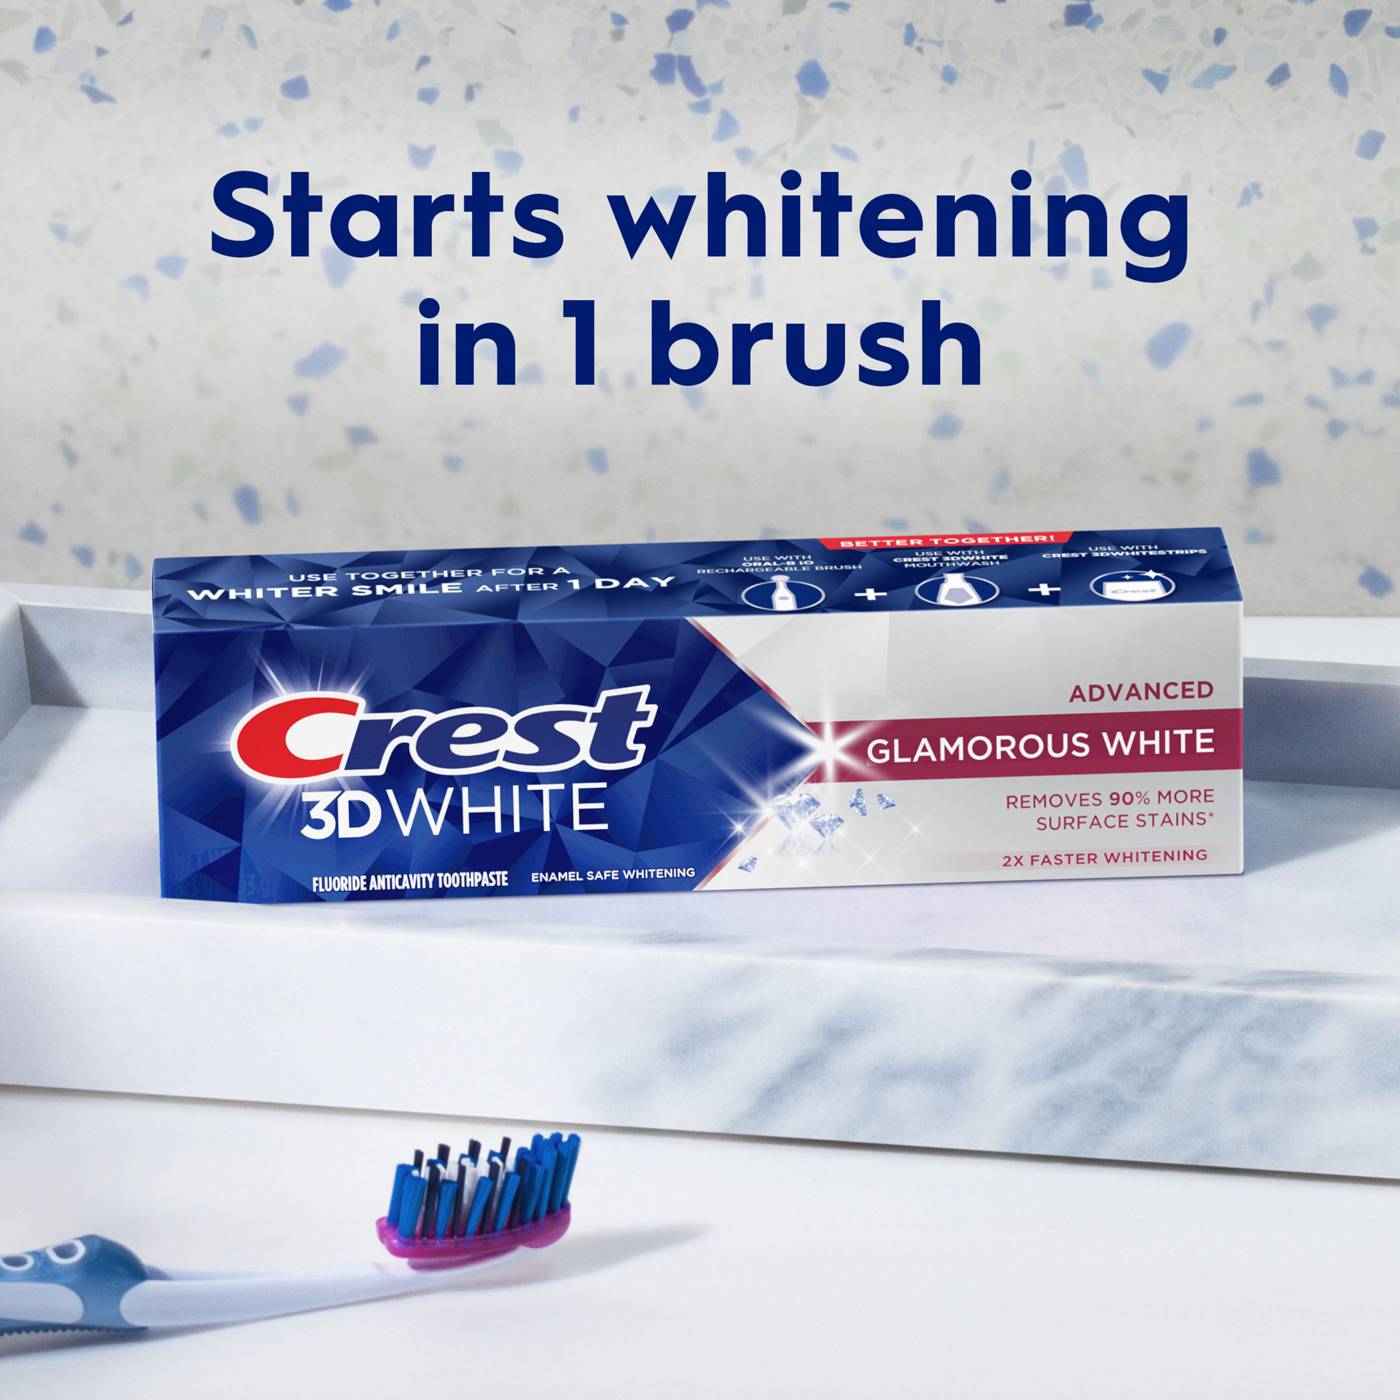 Crest 3D White Whitening Toothpaste - Glamorous White; image 3 of 8